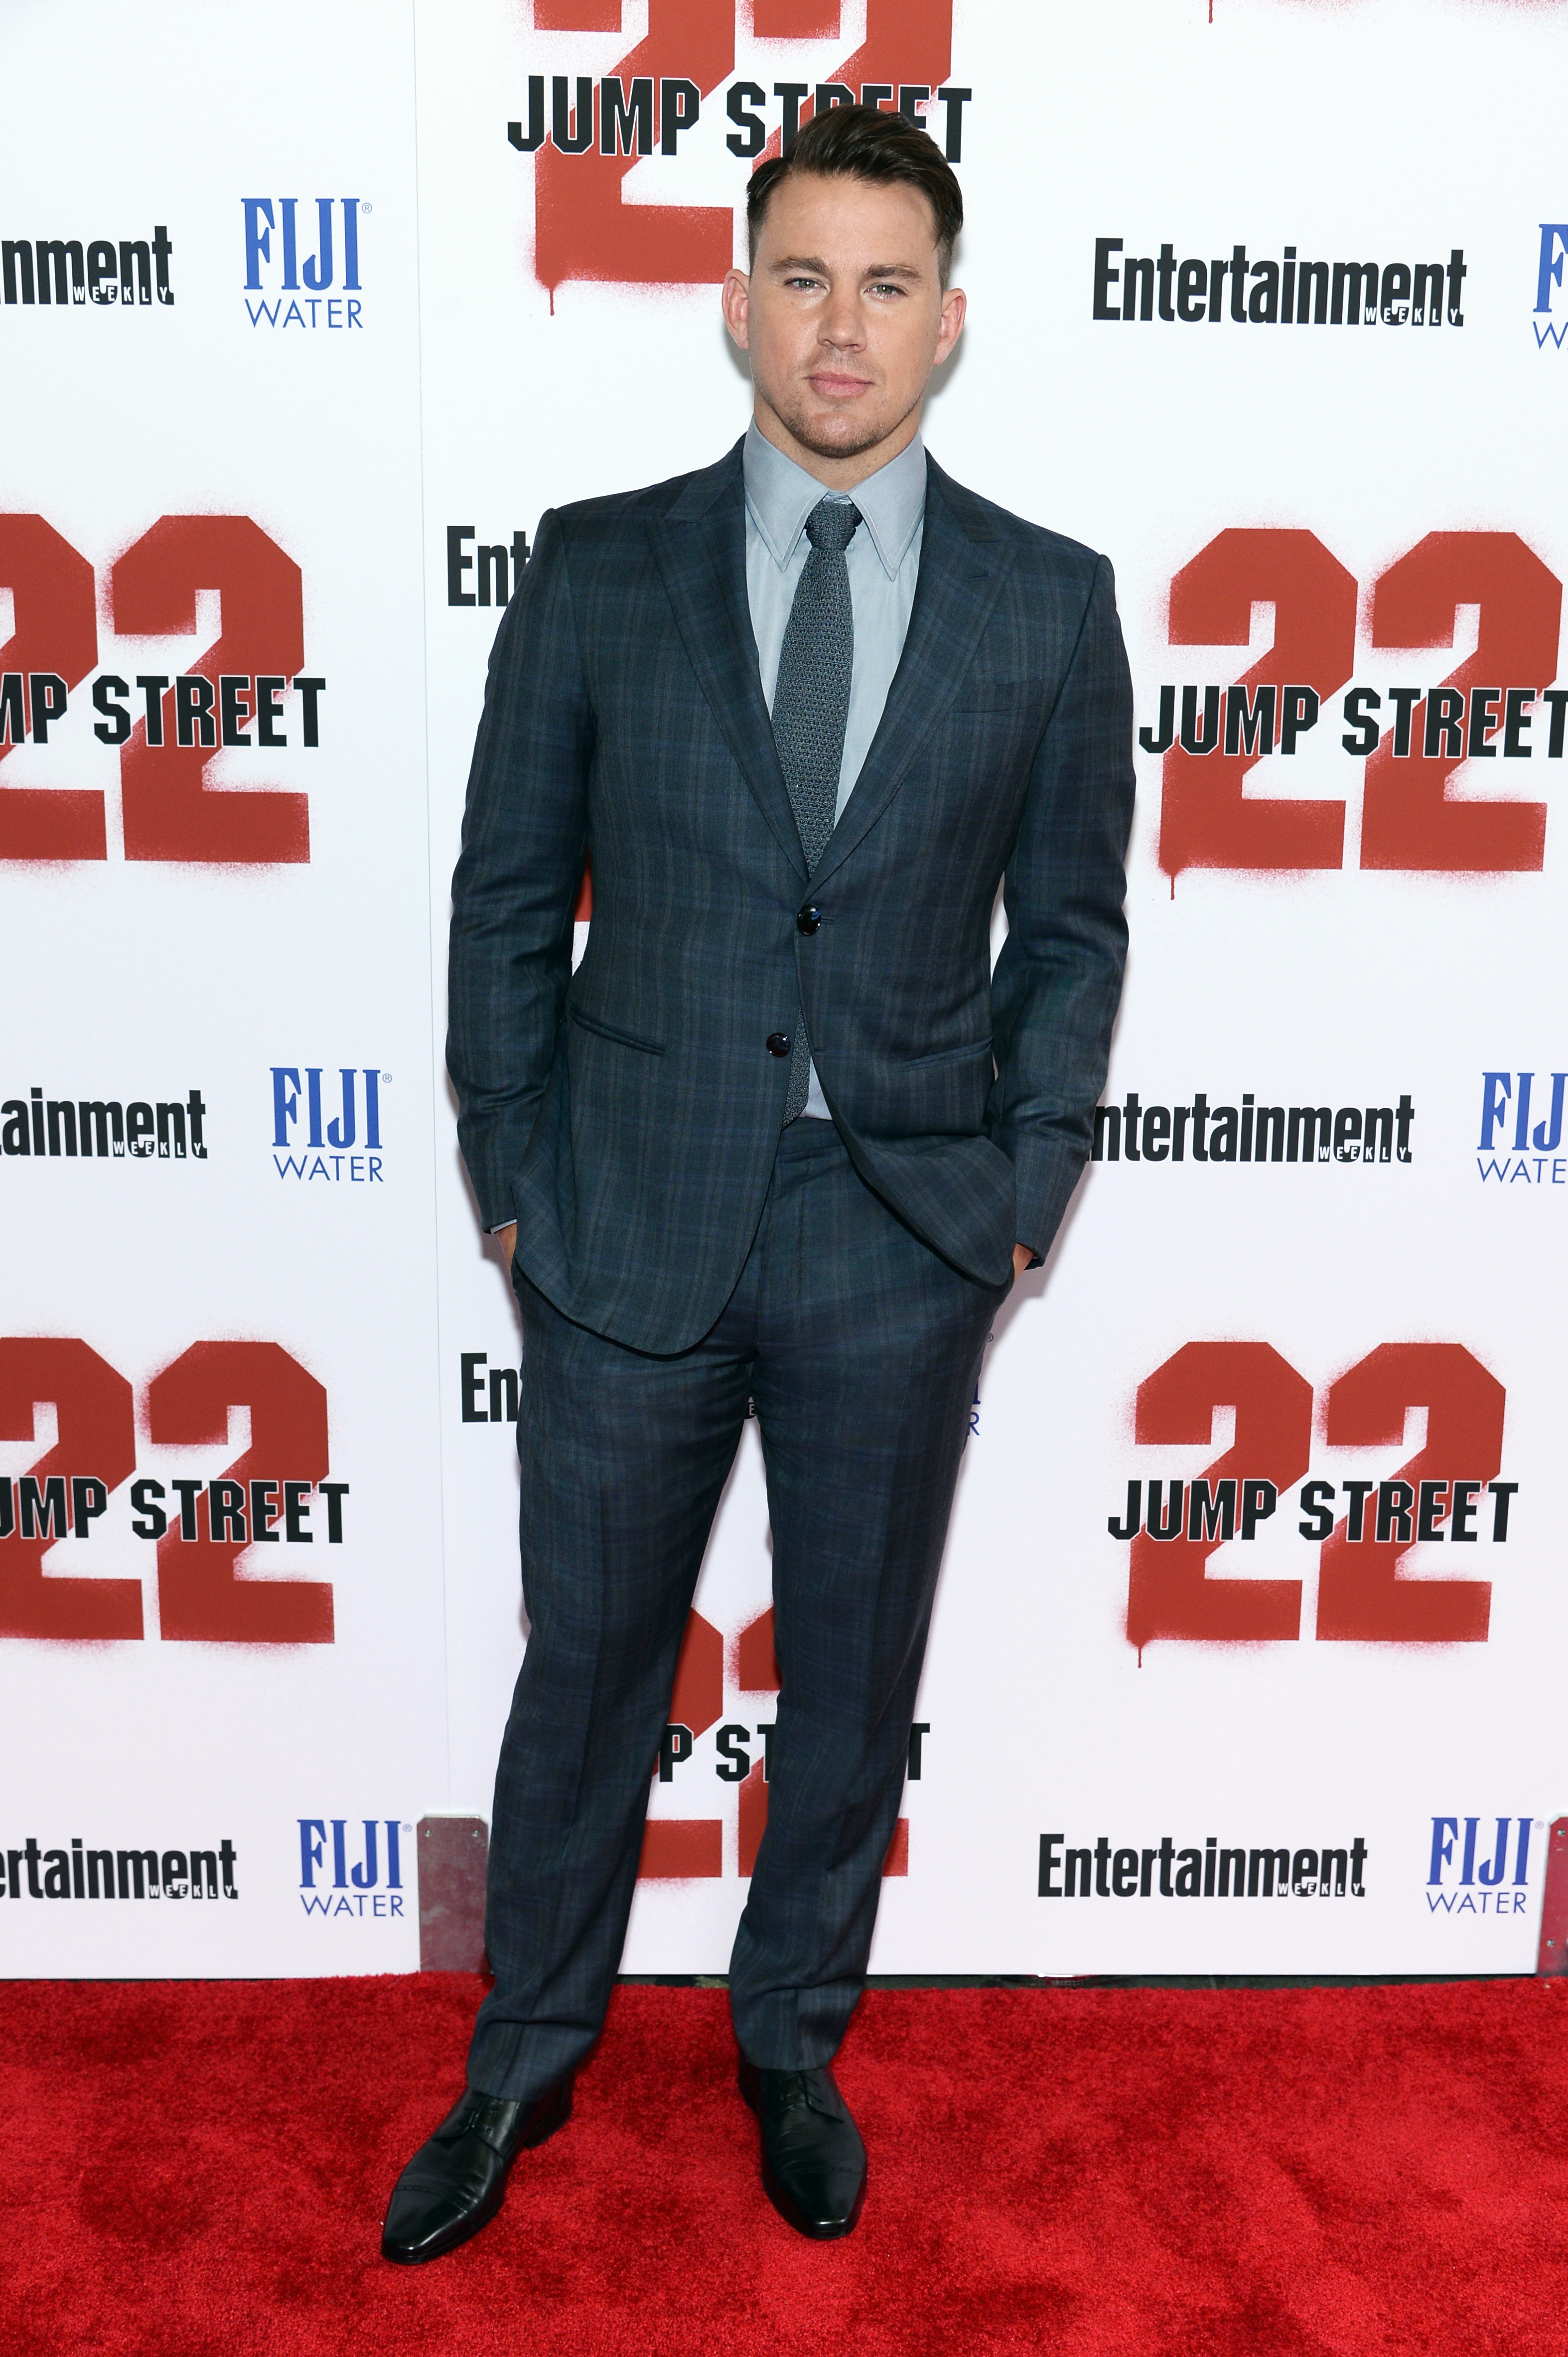 Channing Tatum Attends 22 Jump Street Premiere in Giorgio Armani